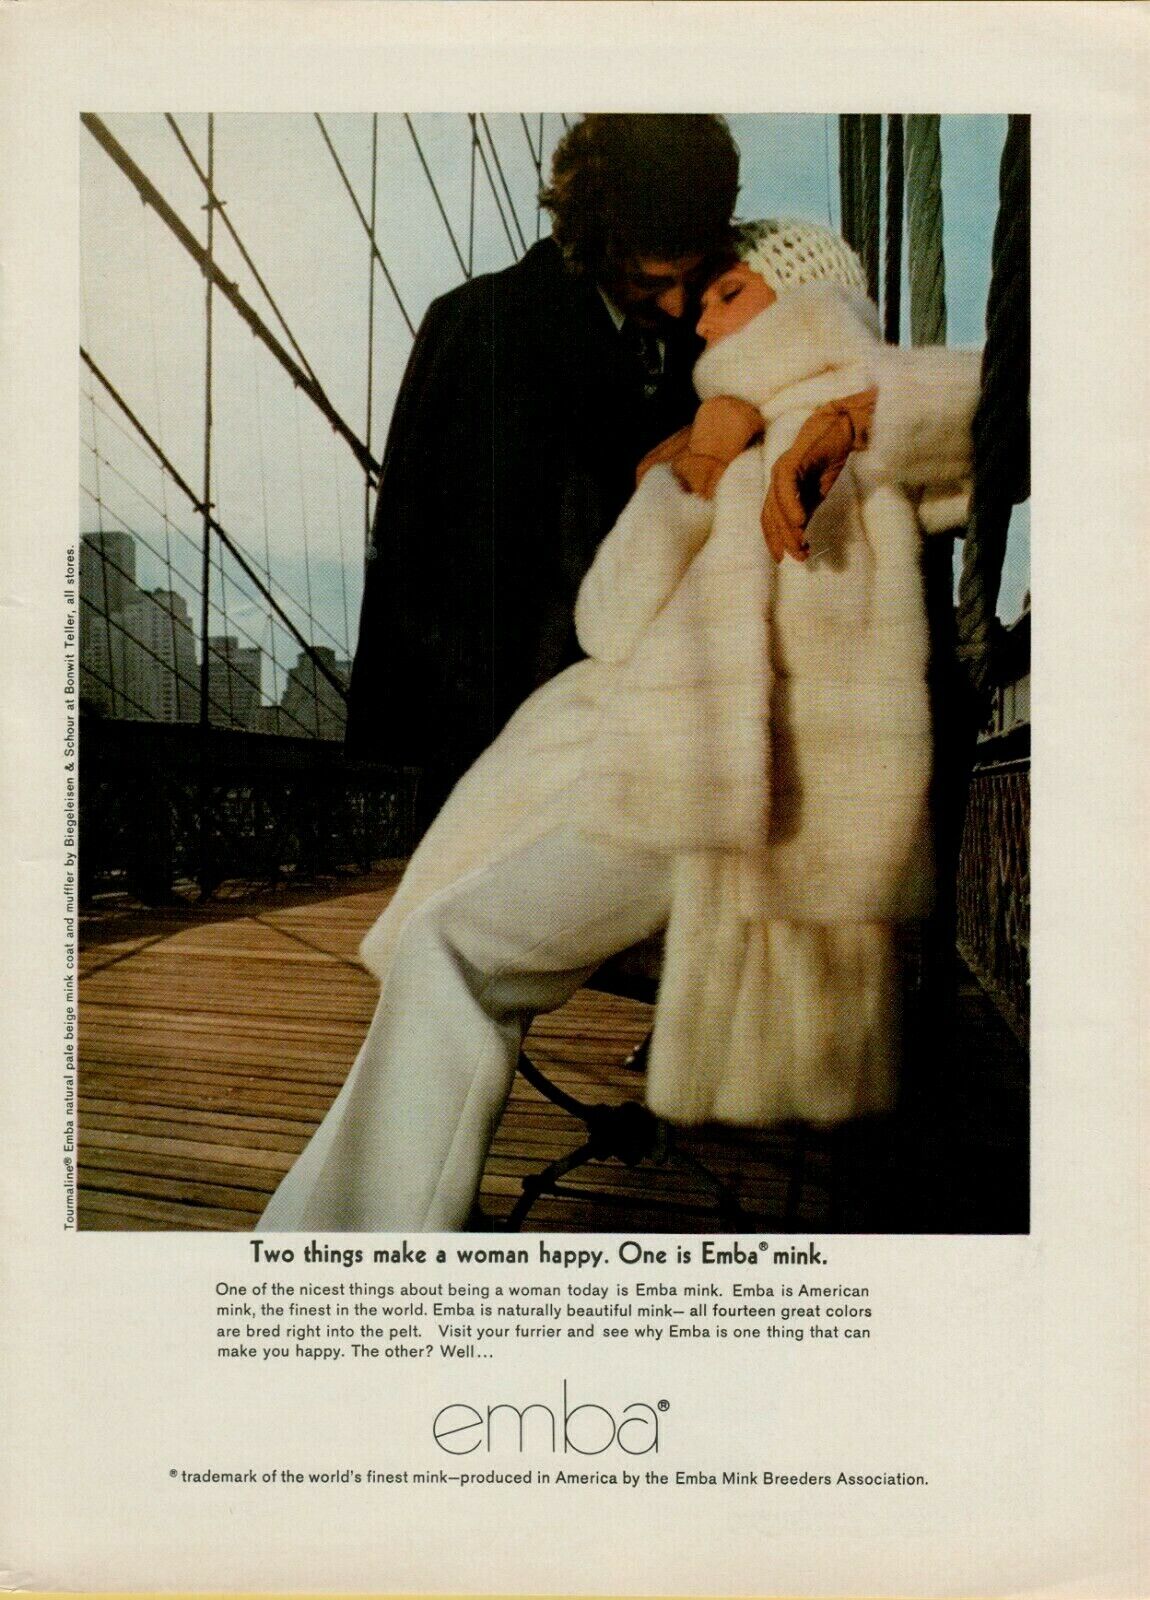 1969 Emba Mink Make a Woman Happy Brooklyn Bridge Romantic Vintage Print Ad